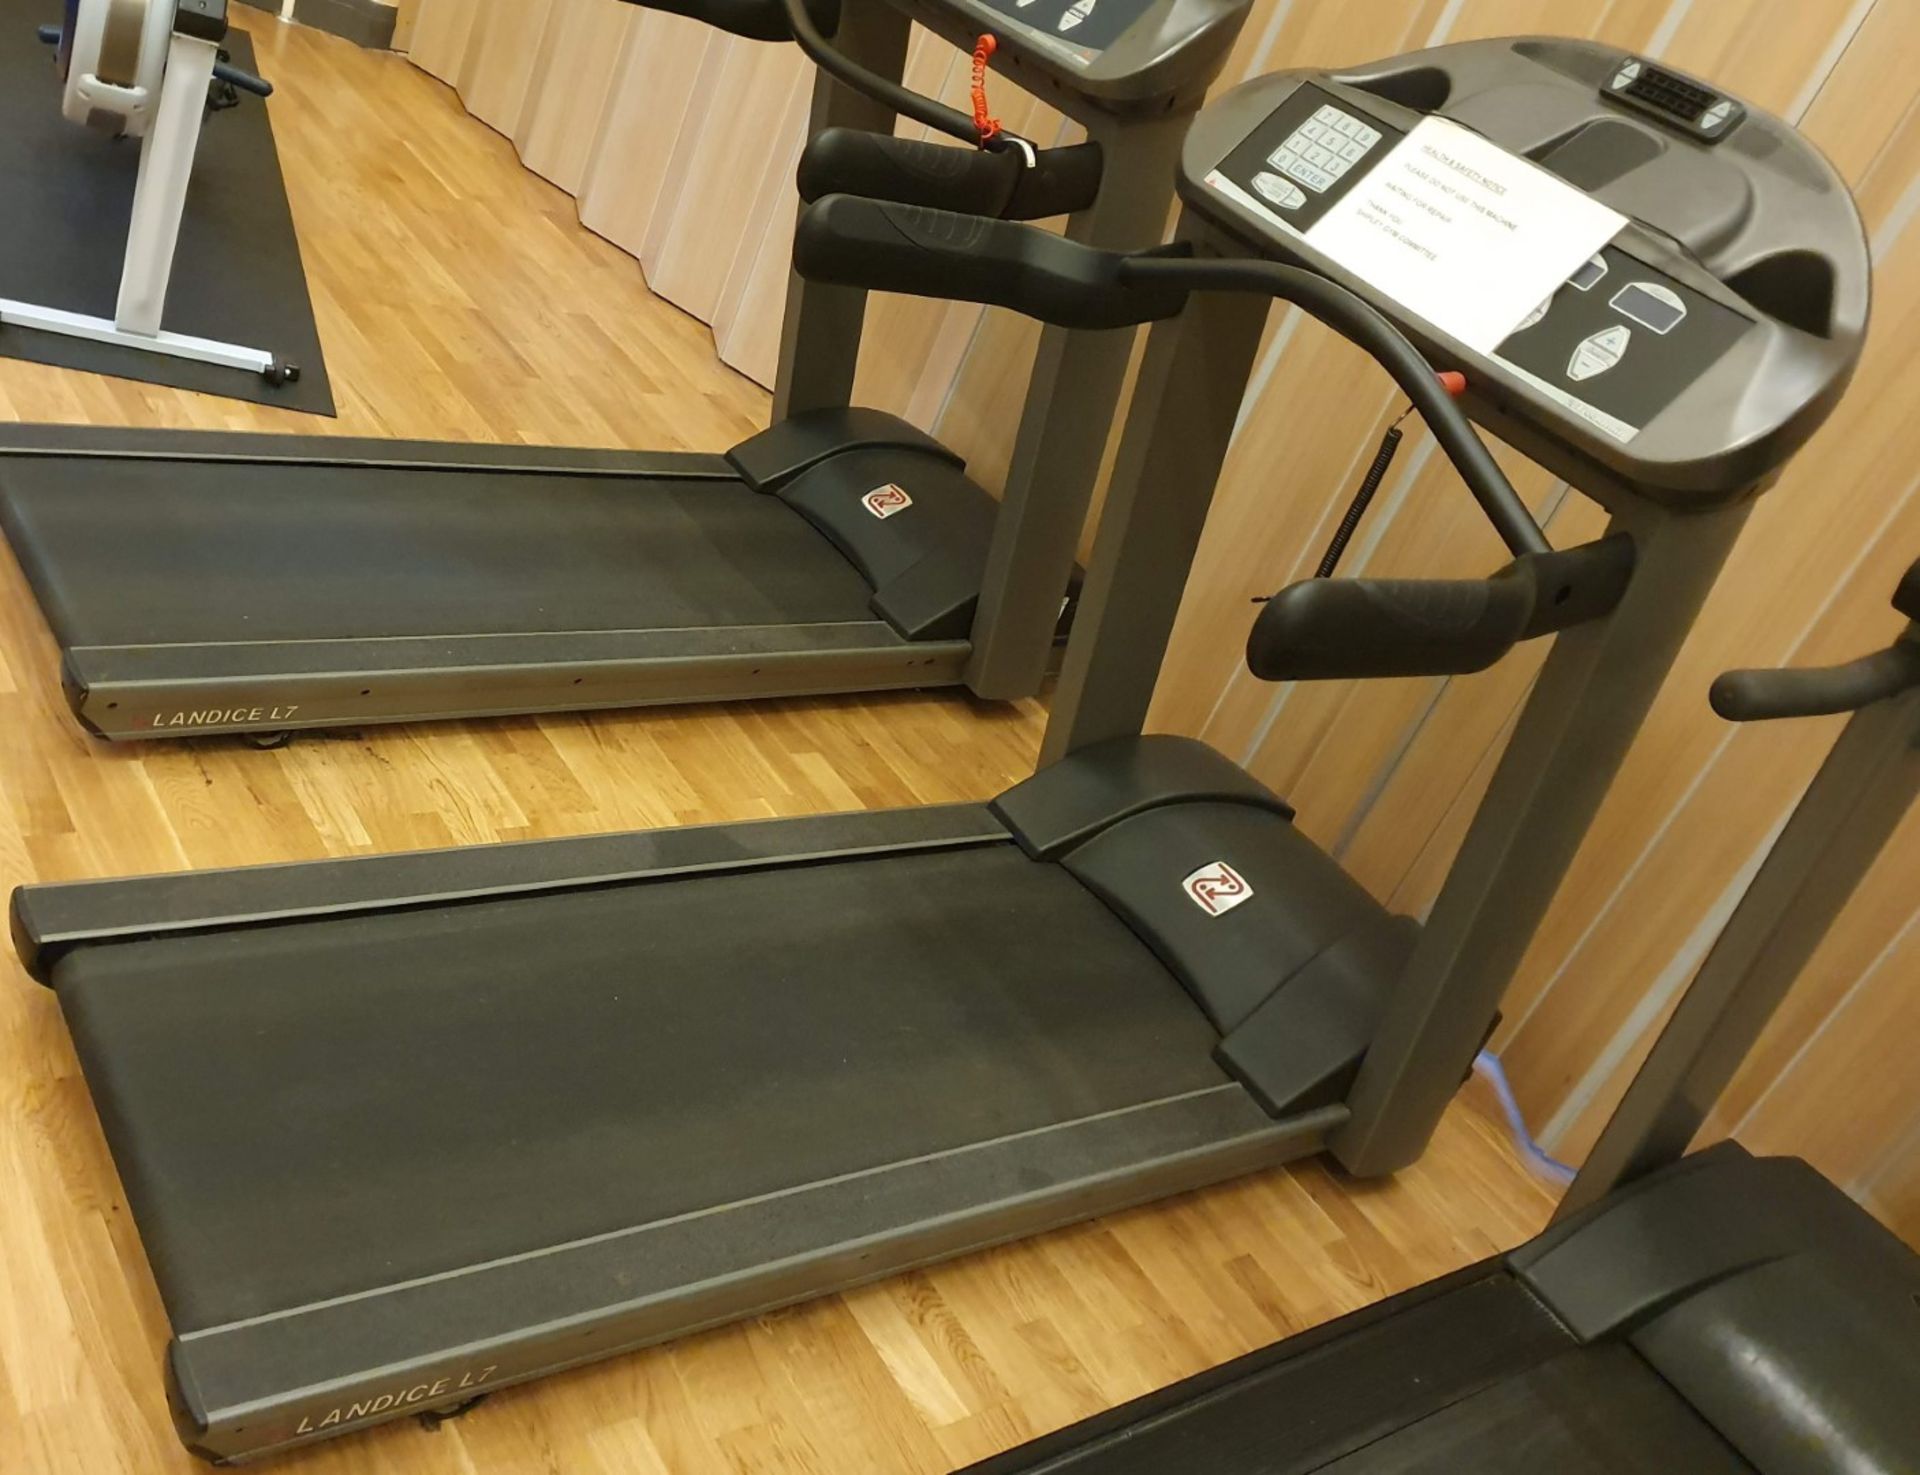 1 x Landice L7 Club Series Treadmill Running Machine - Approx RRP £6,000 - Please Read Description -